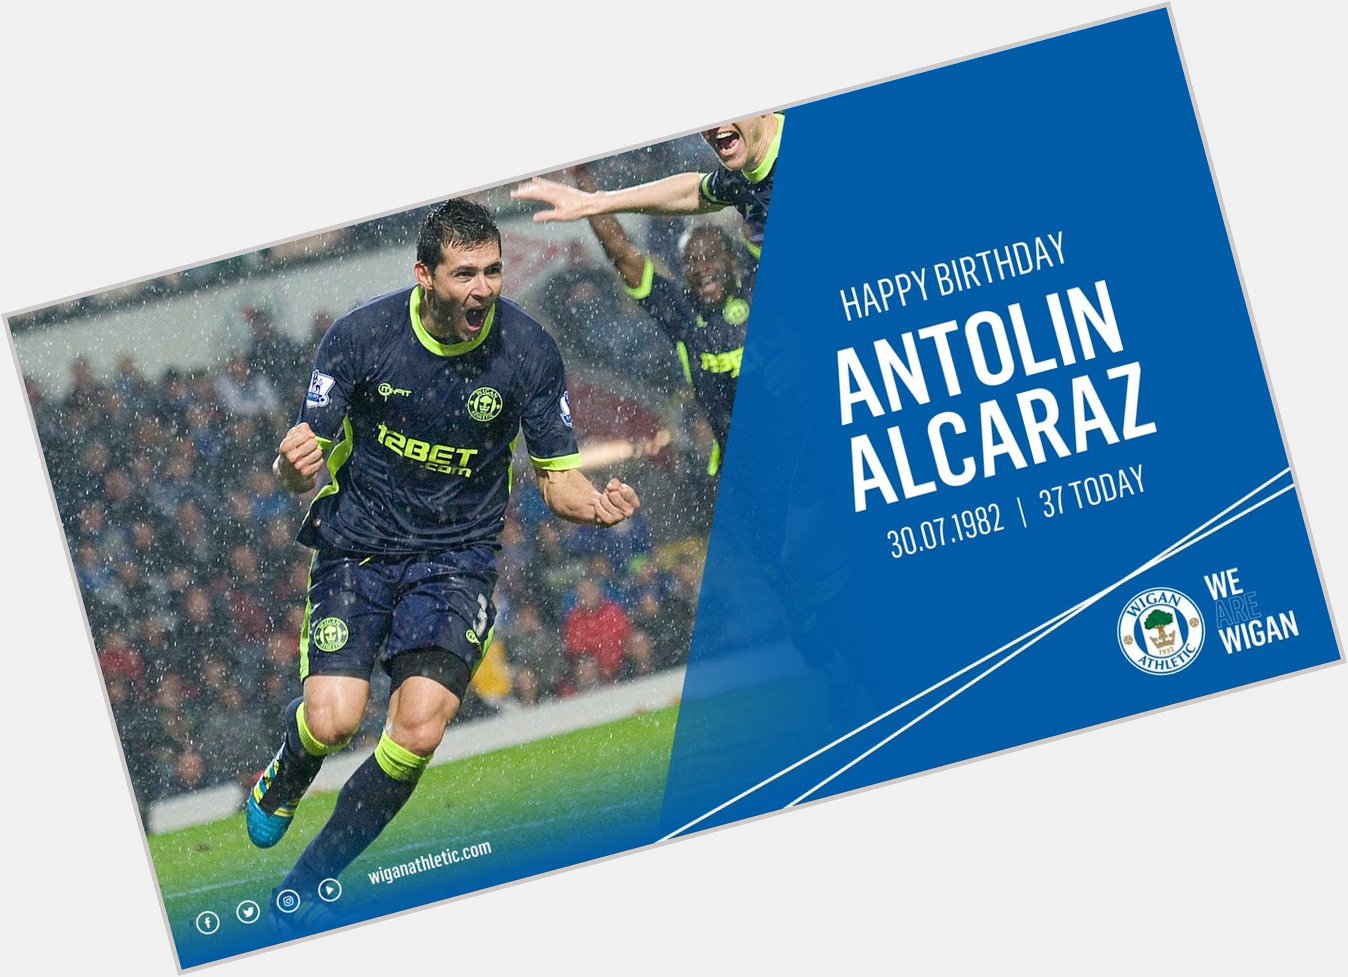   Happy Birthday, Antolin Alcaraz!     